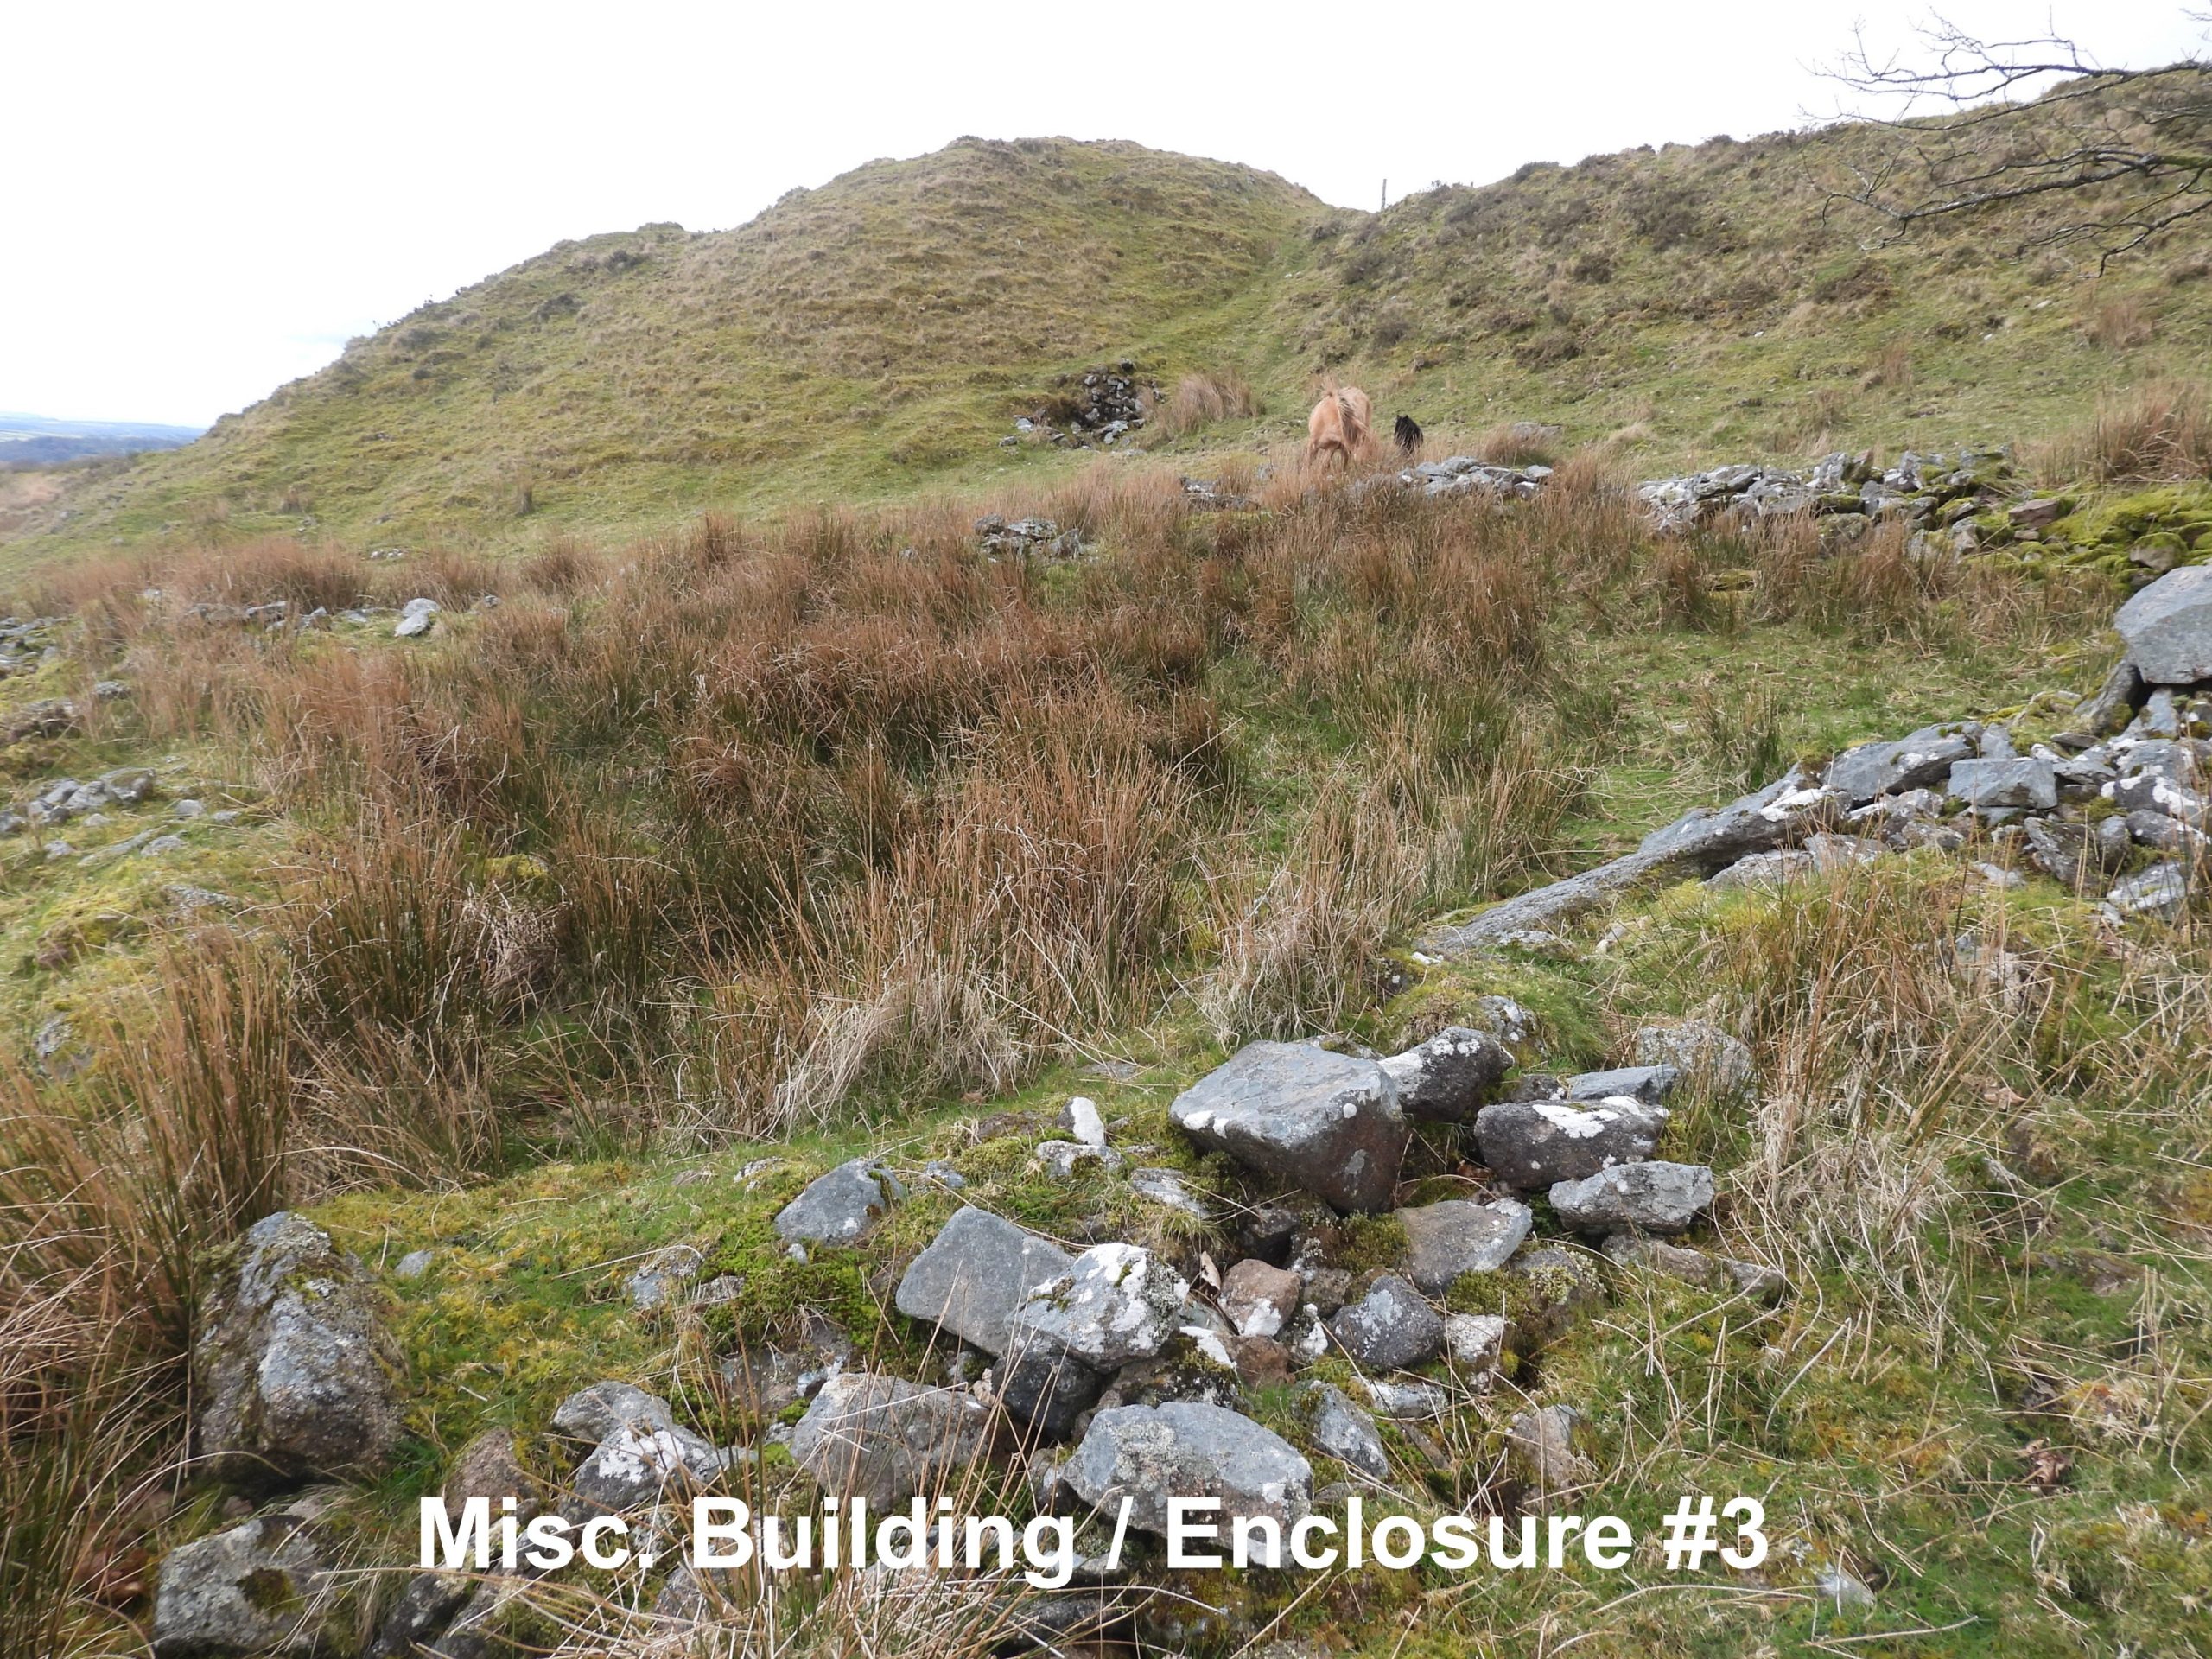 18. Misc Building Enclosure #3